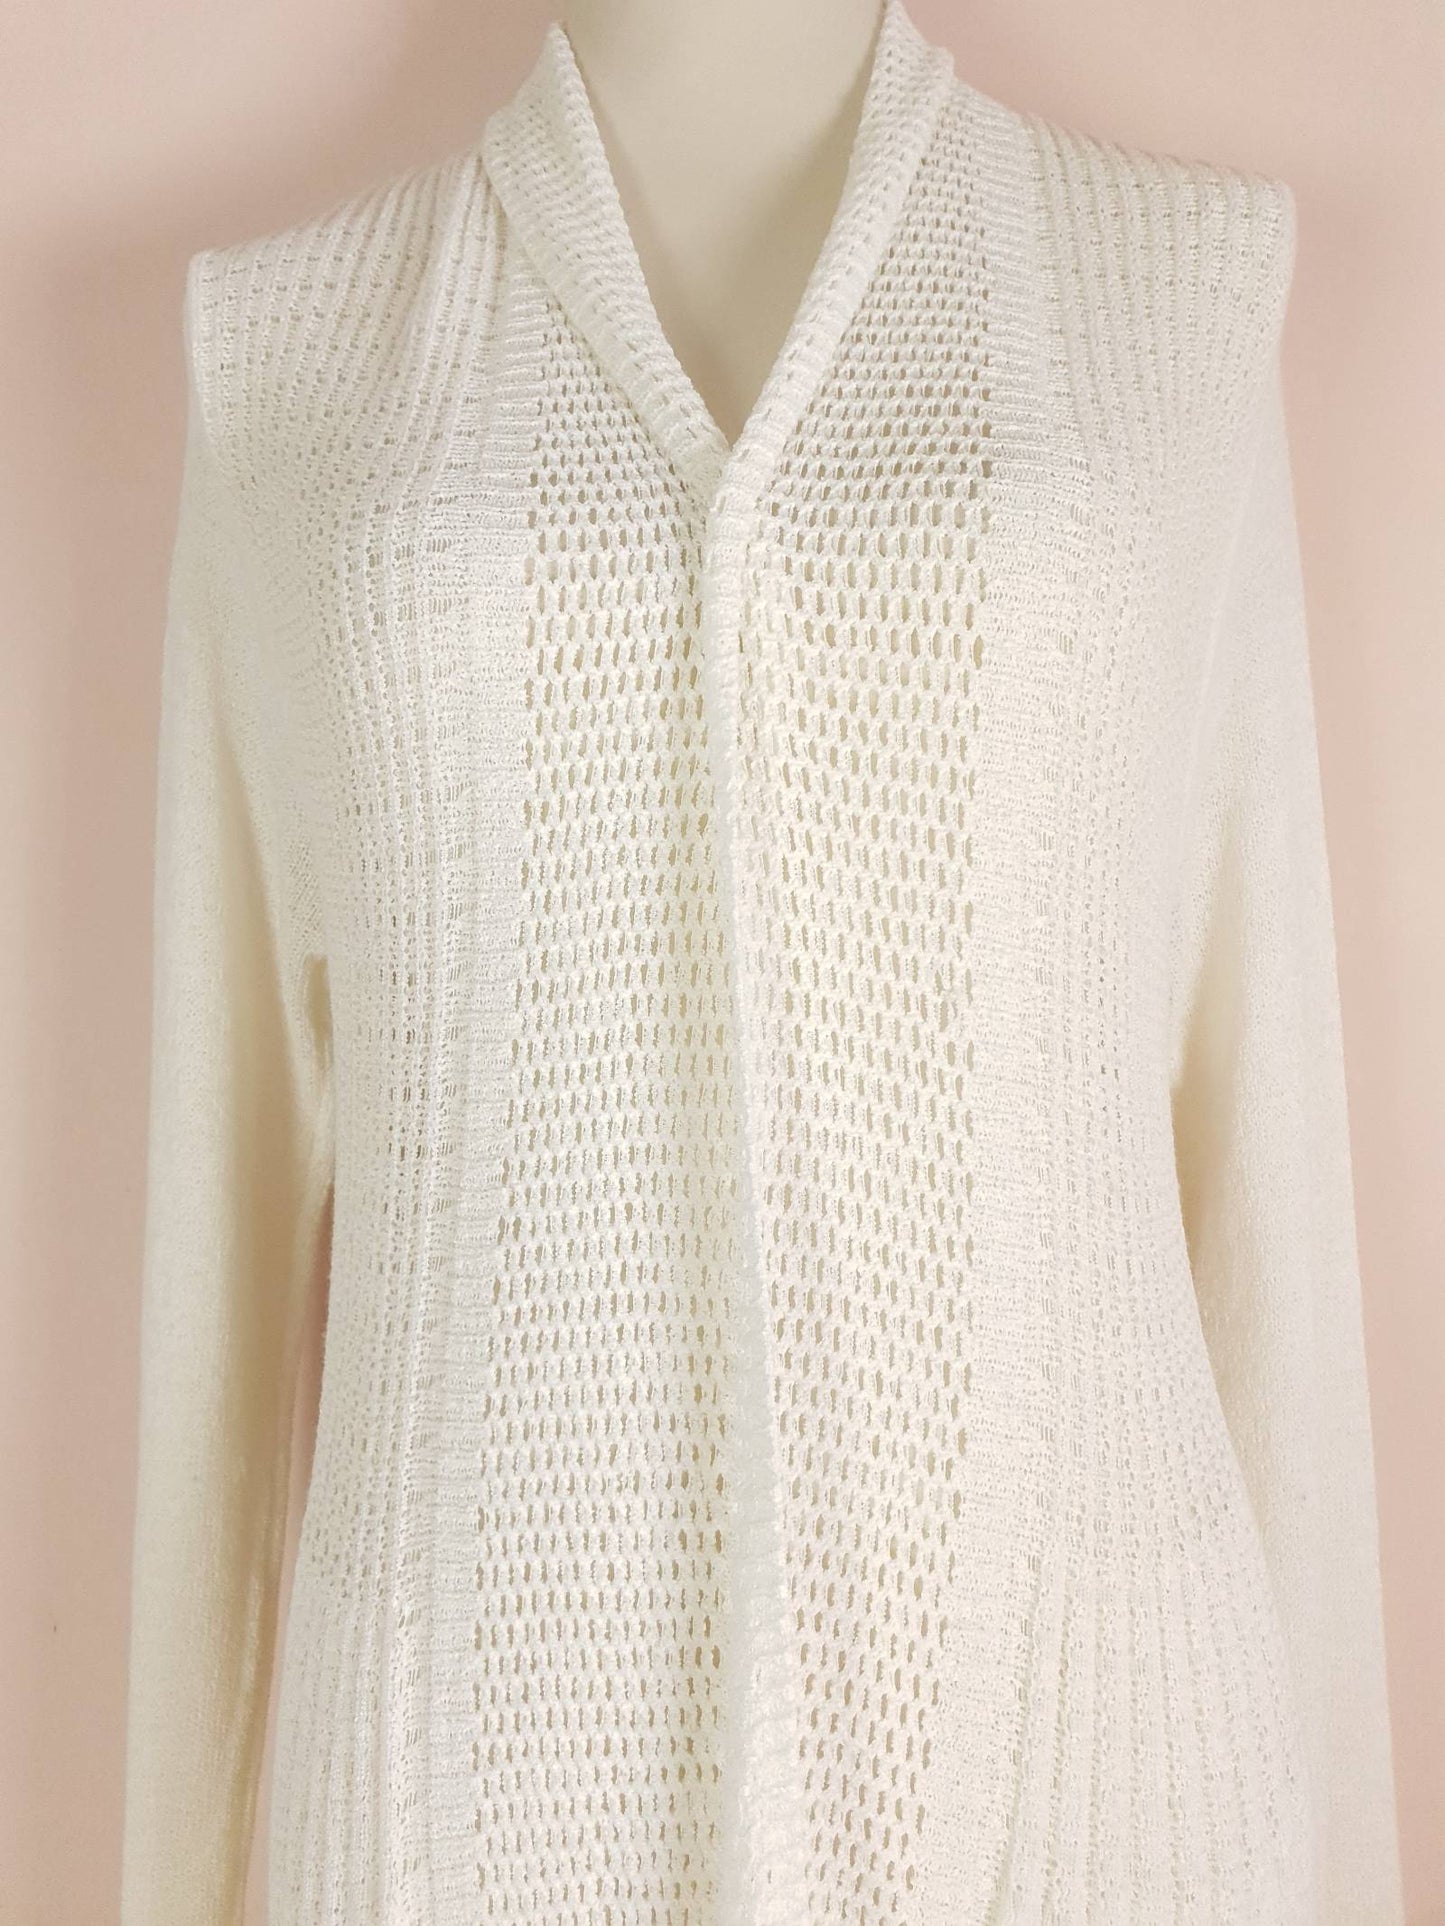 Vintage Cream Knit Cardigan Size 12